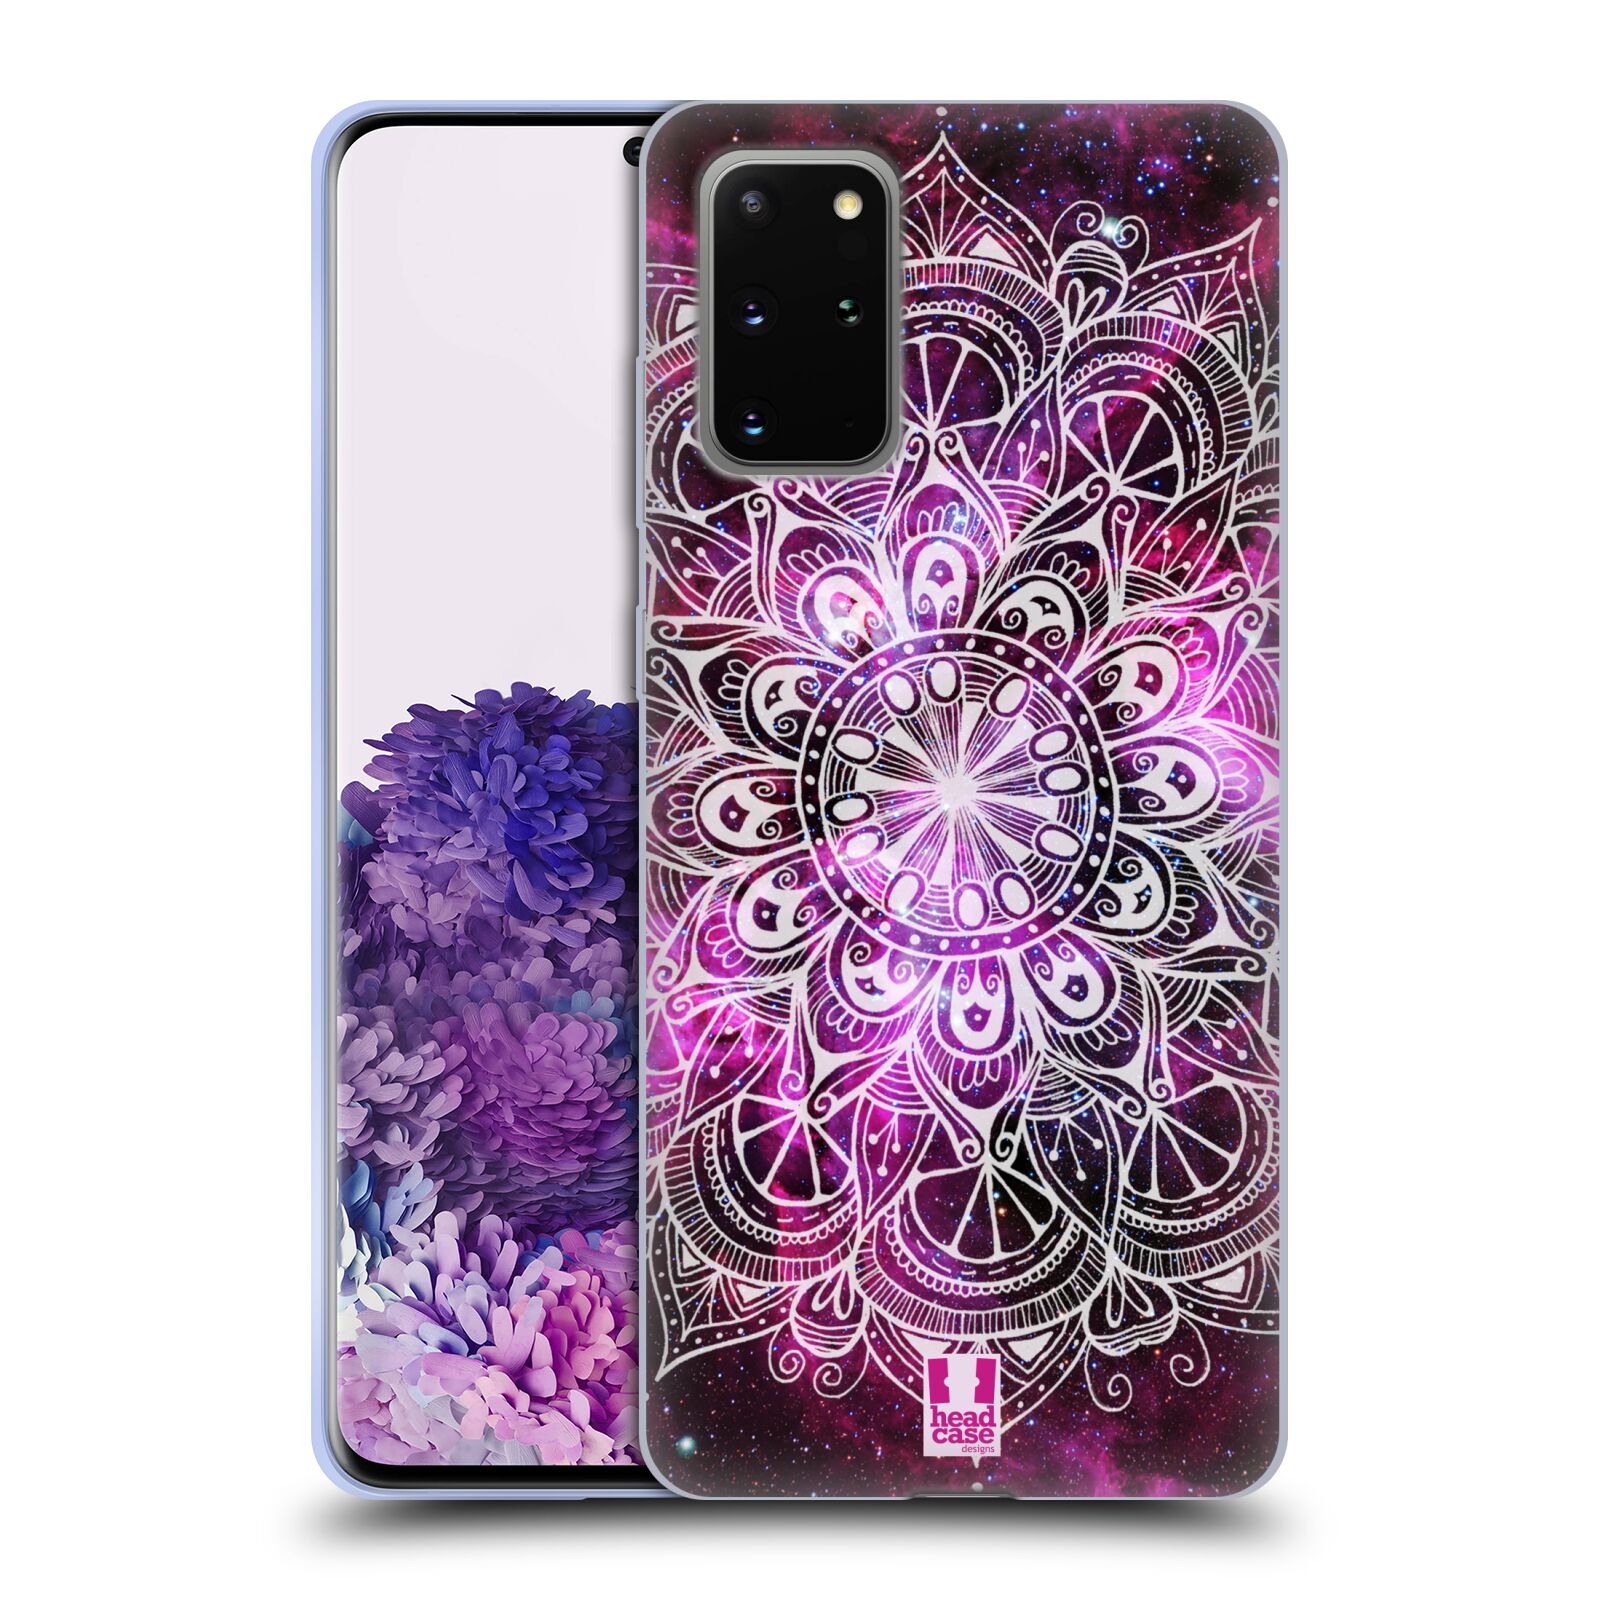 Silikonové pouzdro na mobil Samsung Galaxy S20 Plus - Head Case - Mandala Doodle Nebula (Silikonový kryt, obal, pouzdro na mobilní telefon Samsung Galaxy S20+ s motivem Mandala Doodle Nebula)